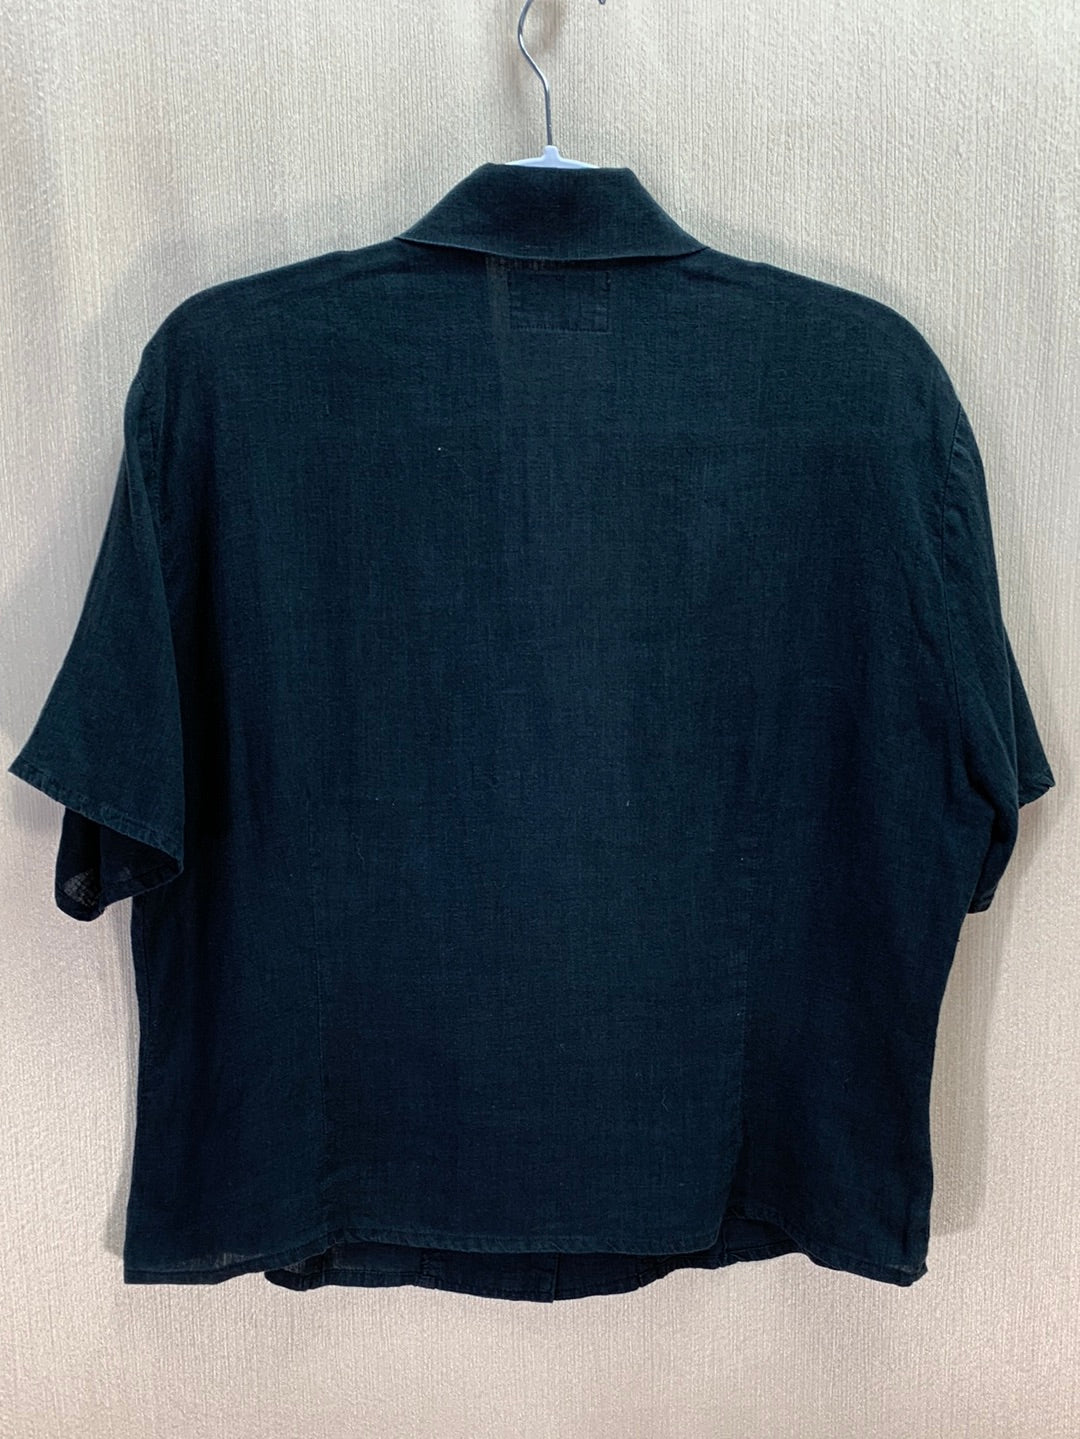 Flax by Jeanne Engelhart White Linen Top Pullover Short Sleeve T